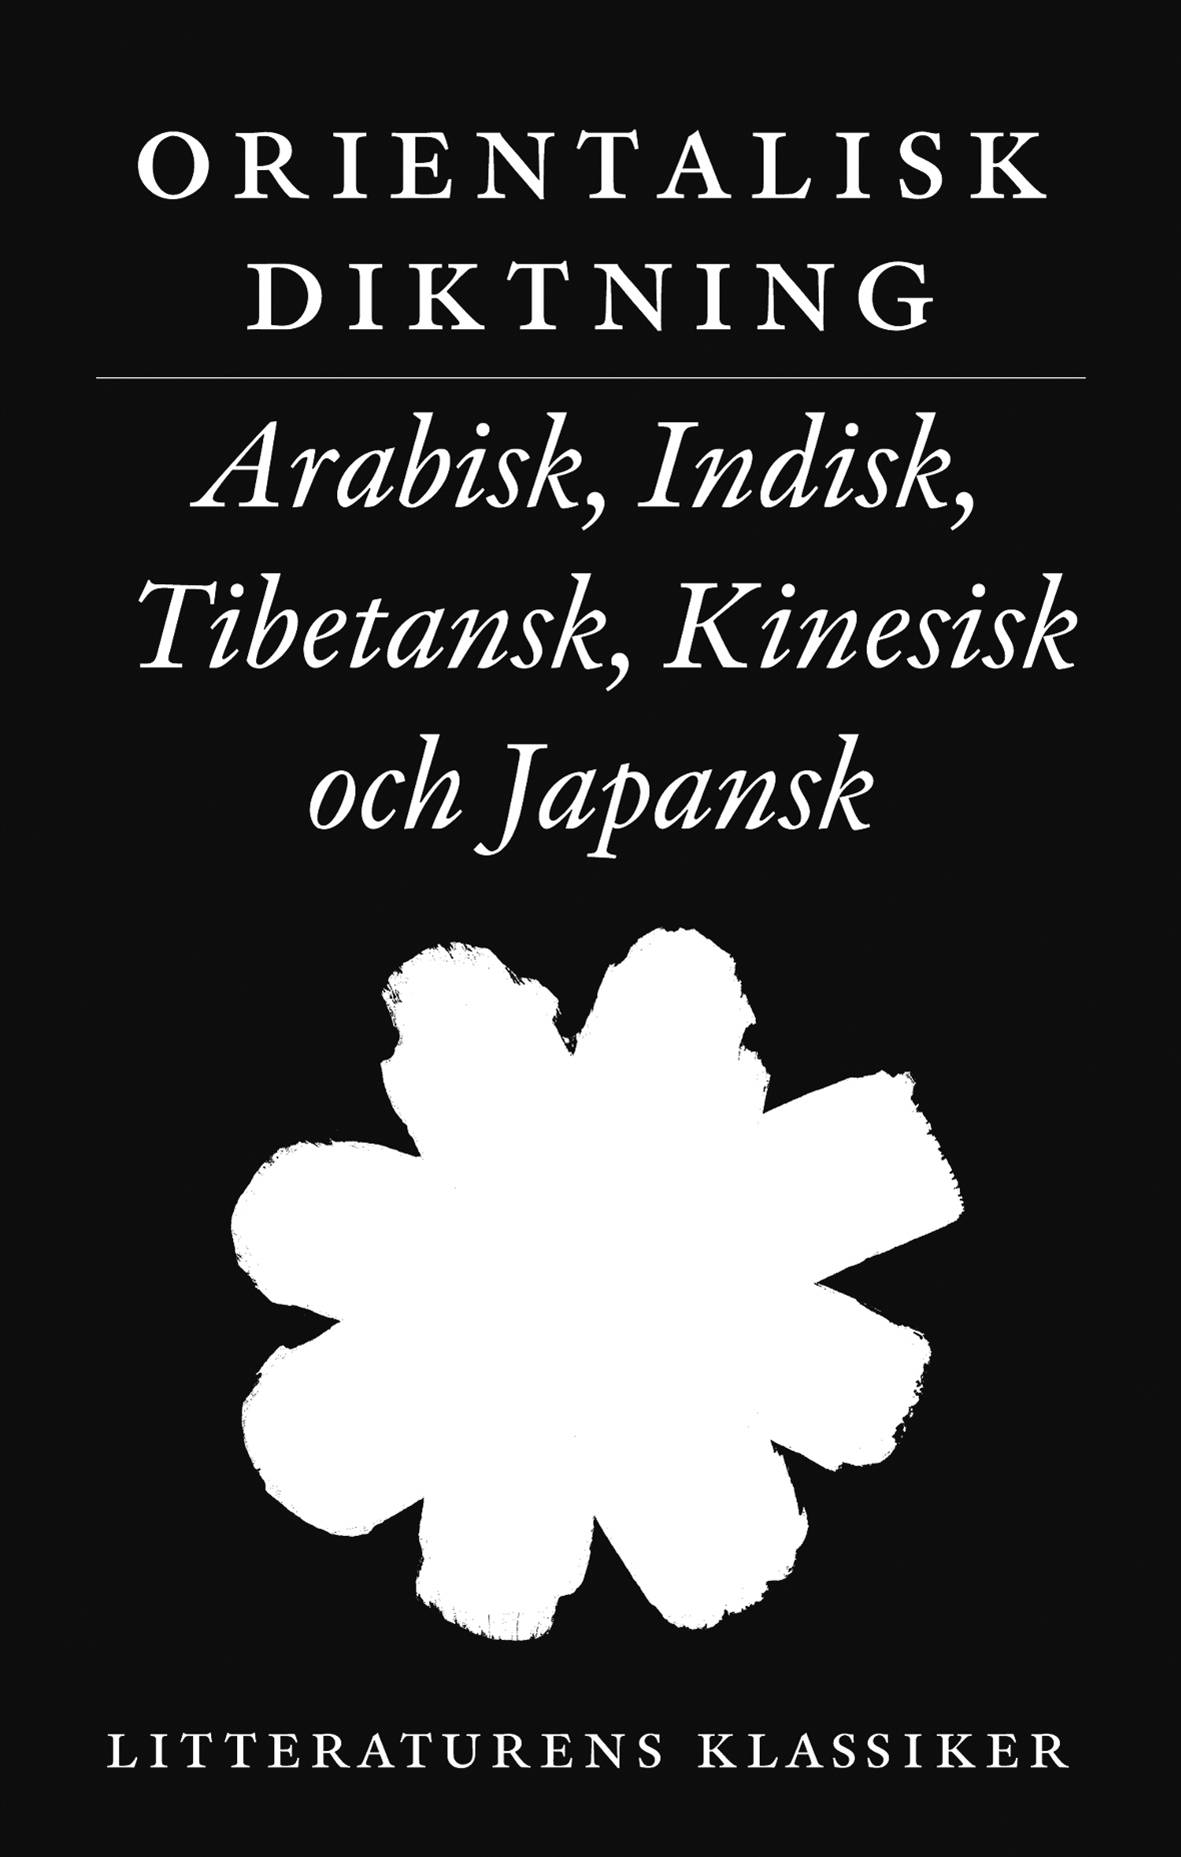 Litteraturens klassiker. Orientalisk diktning : arabisk, indisk, tibetansk, kinesisk och japansk